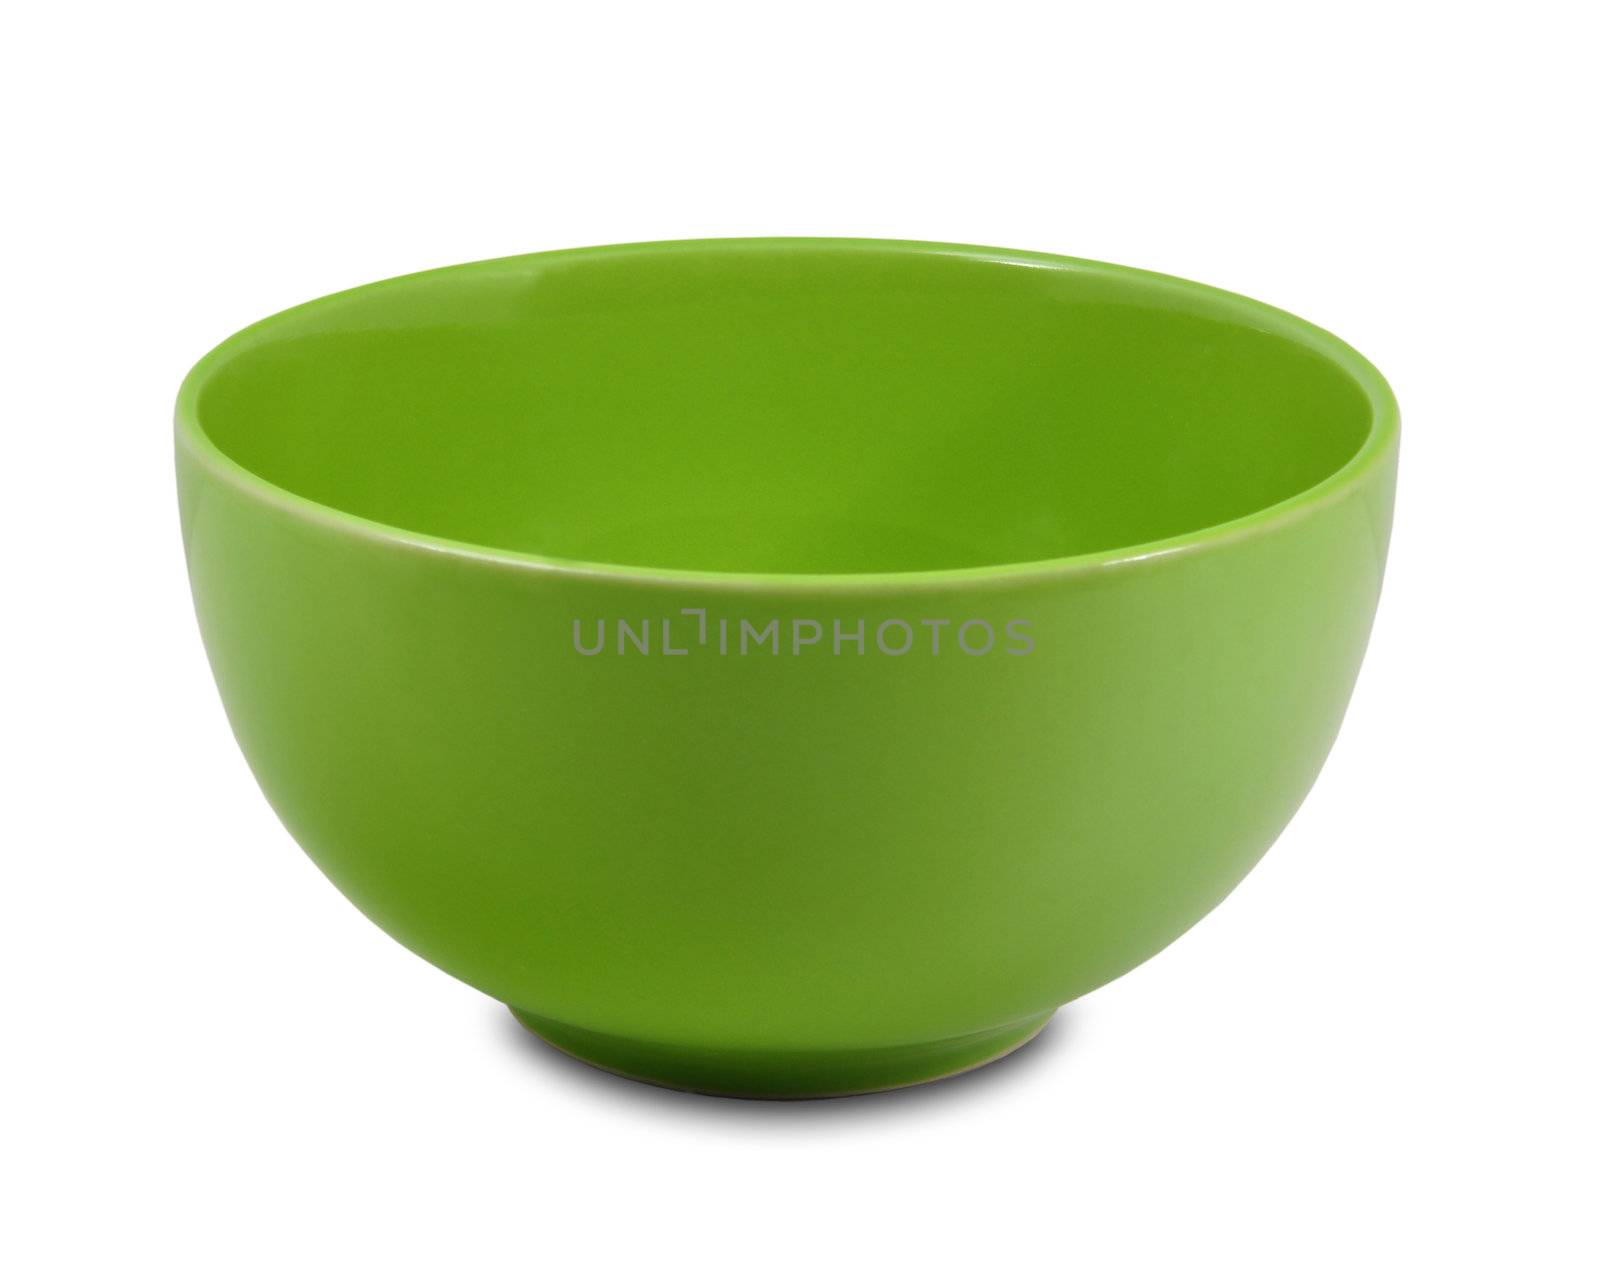 green pot by antpkr